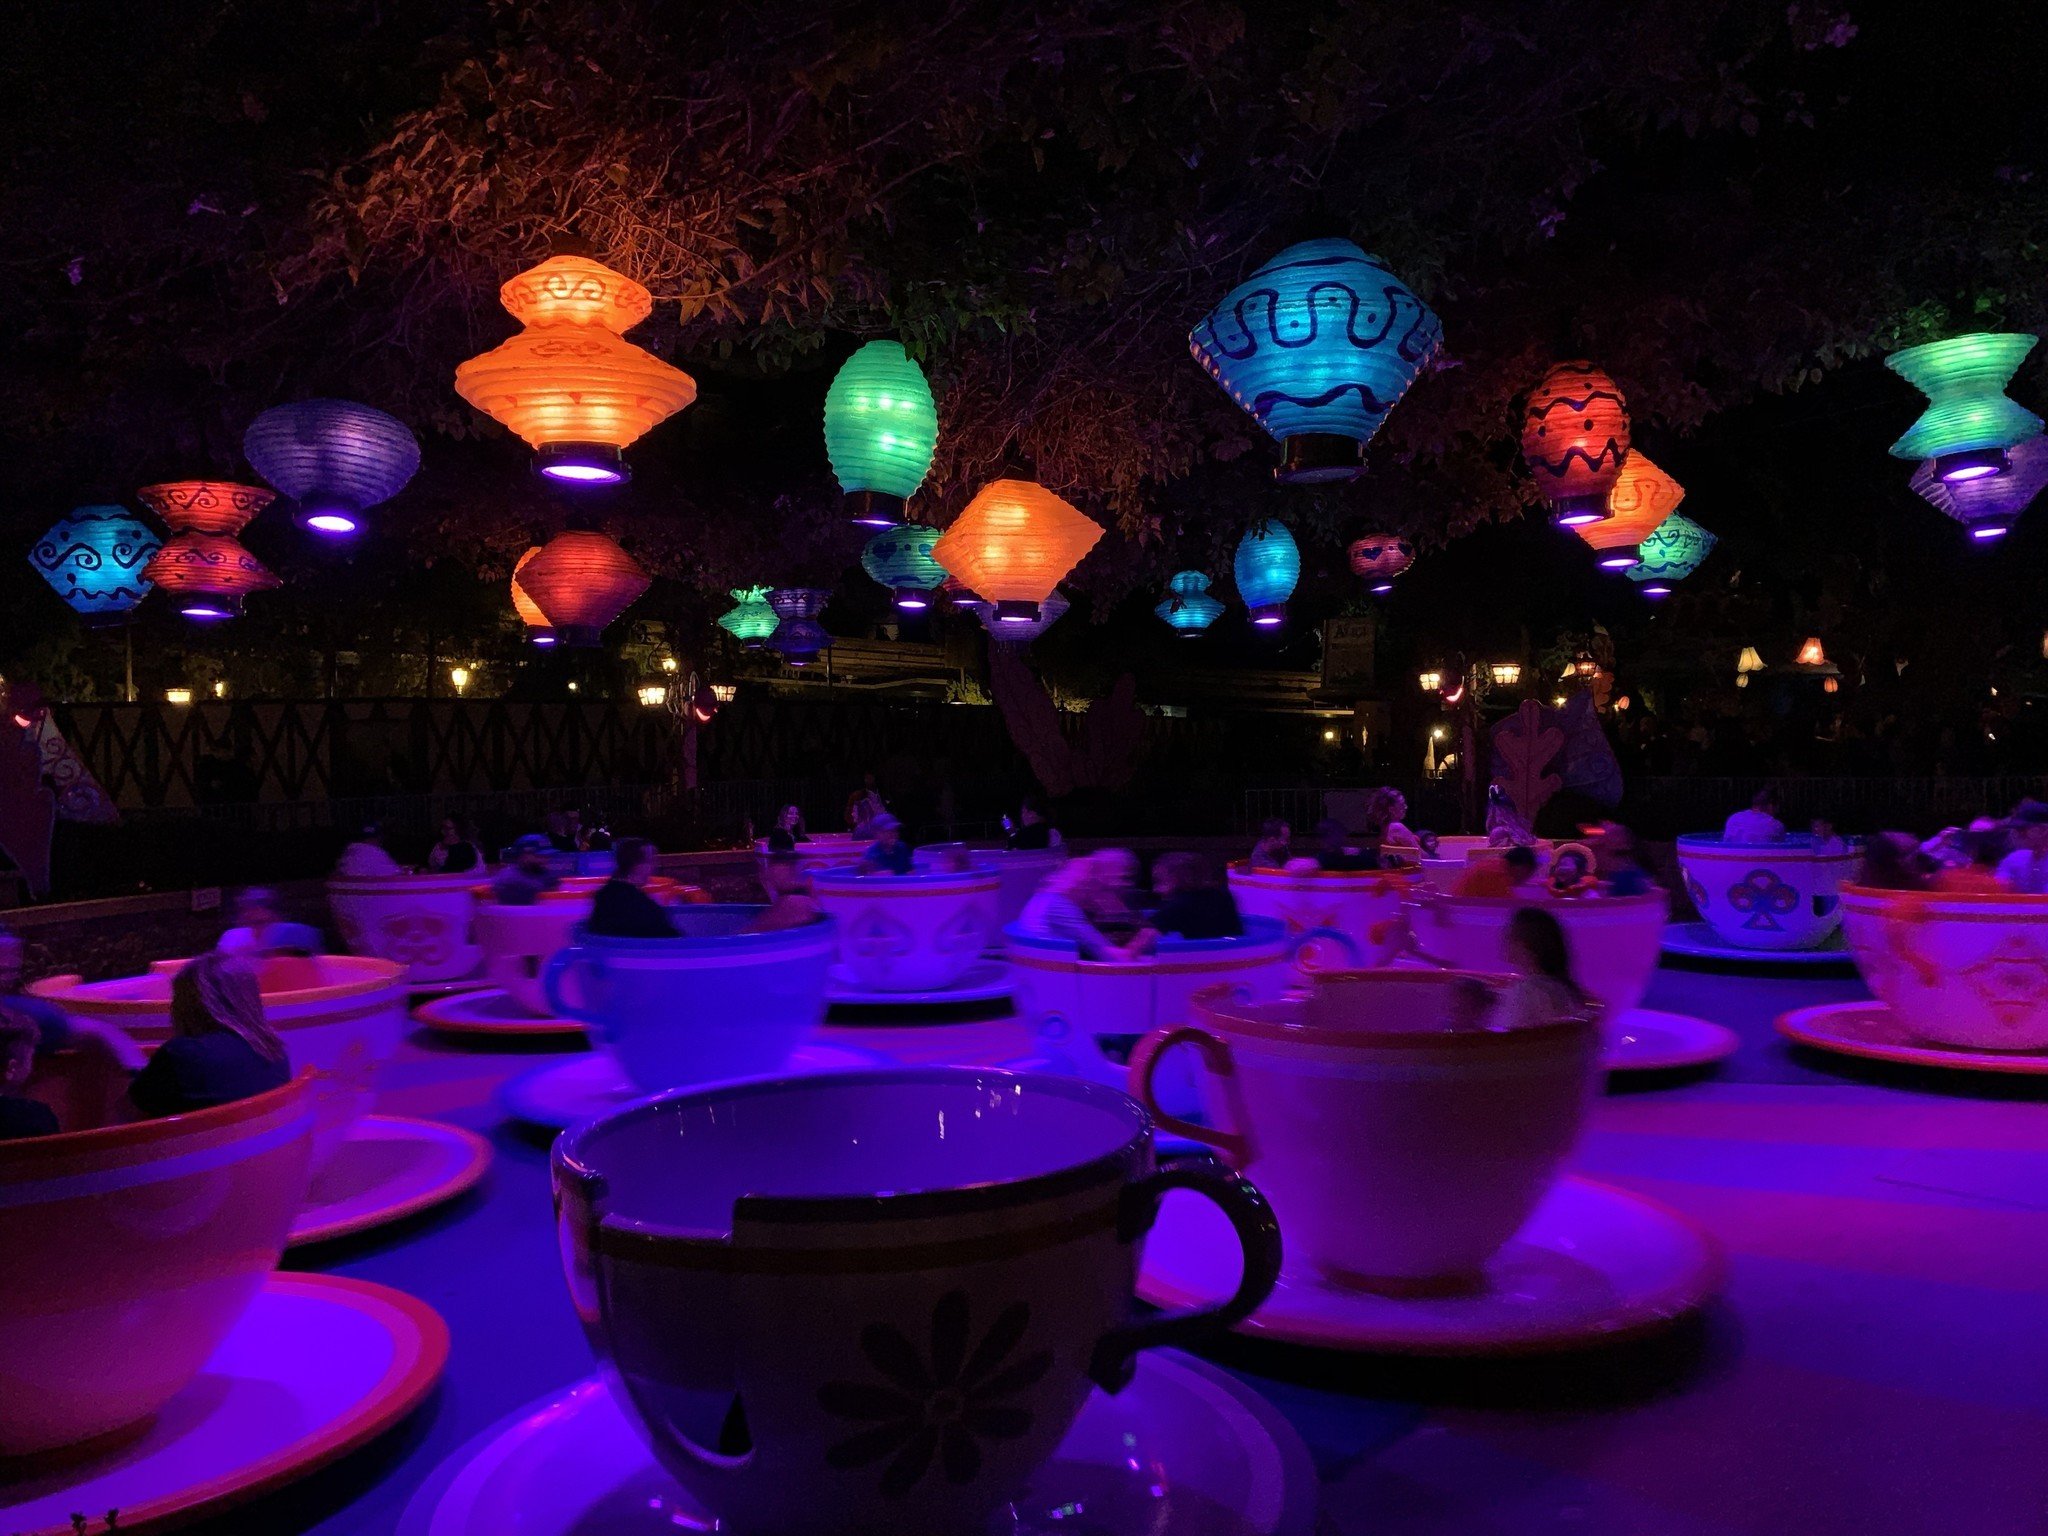 Disneyland Alice in Wonderland Teacups